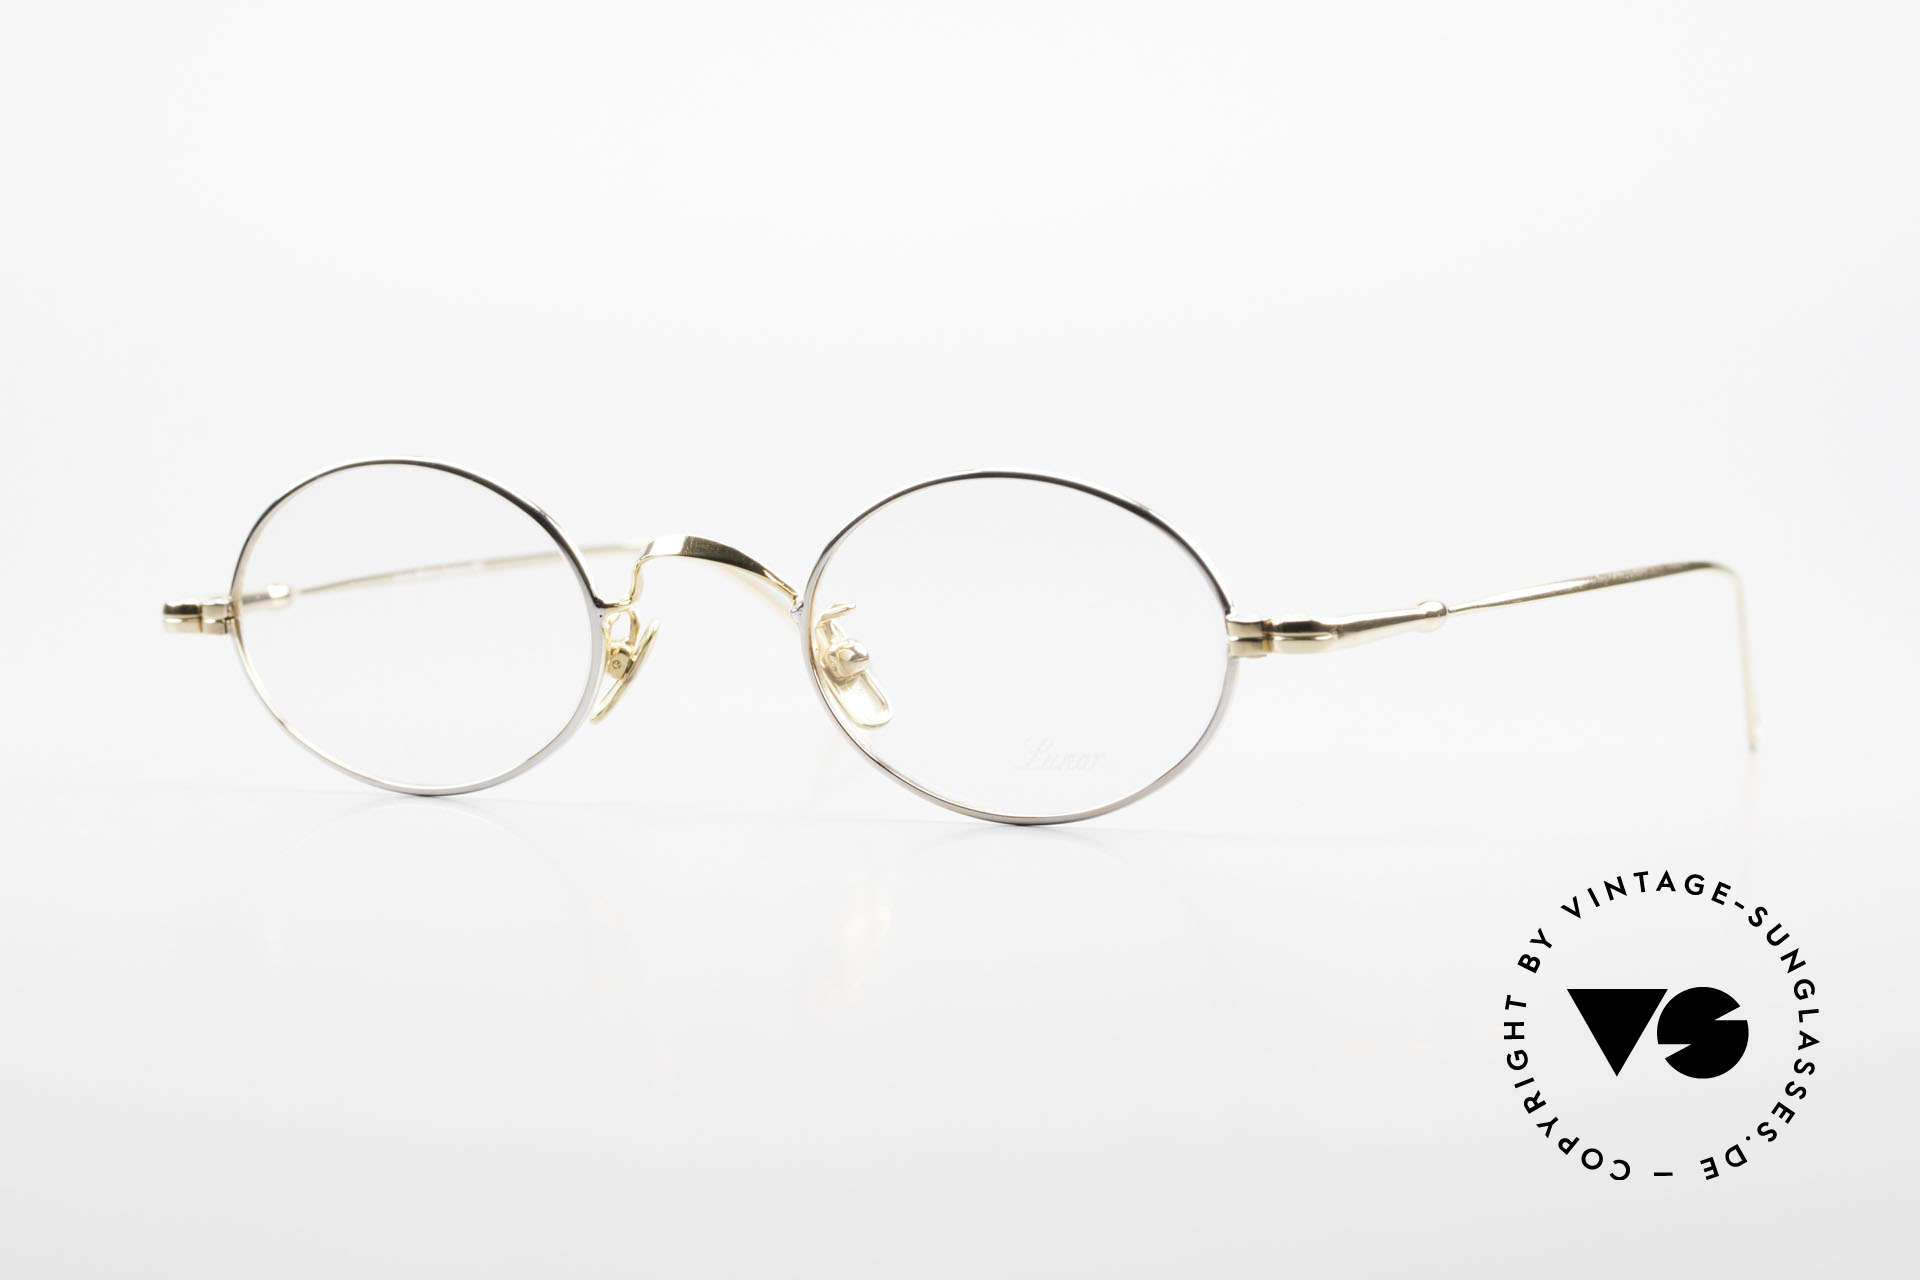 Lunor V 100 Oval Vintage Glasses Bicolor, LUNOR: honest craftsmanship with attention to details, Made for Men and Women